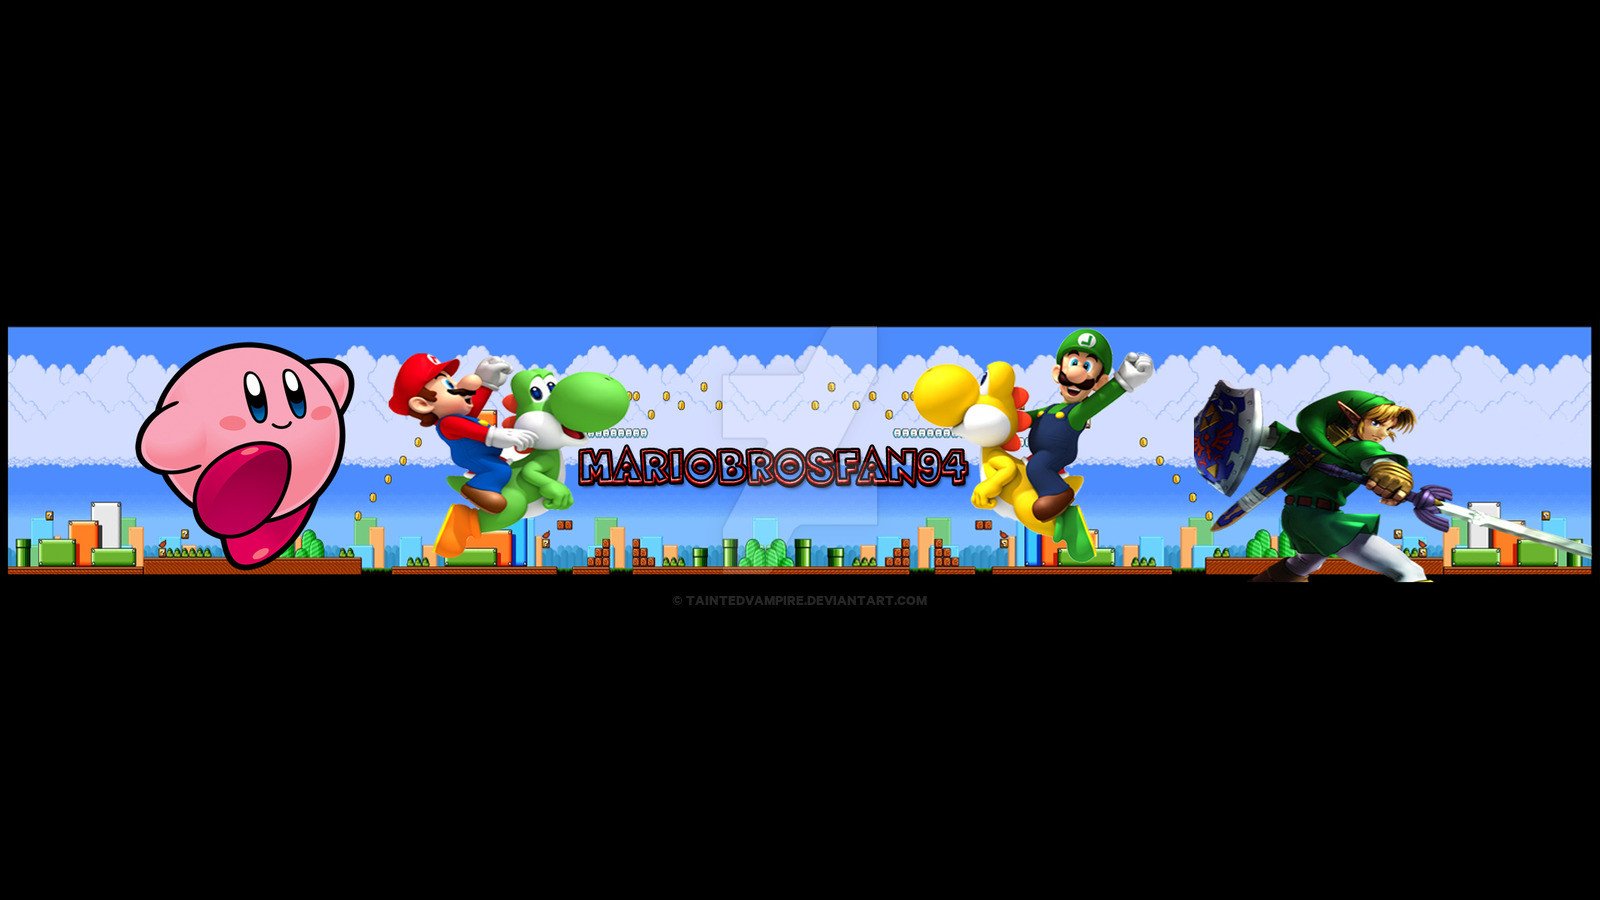 Mariobrosfan94 banner youtube by TaintedVampire on